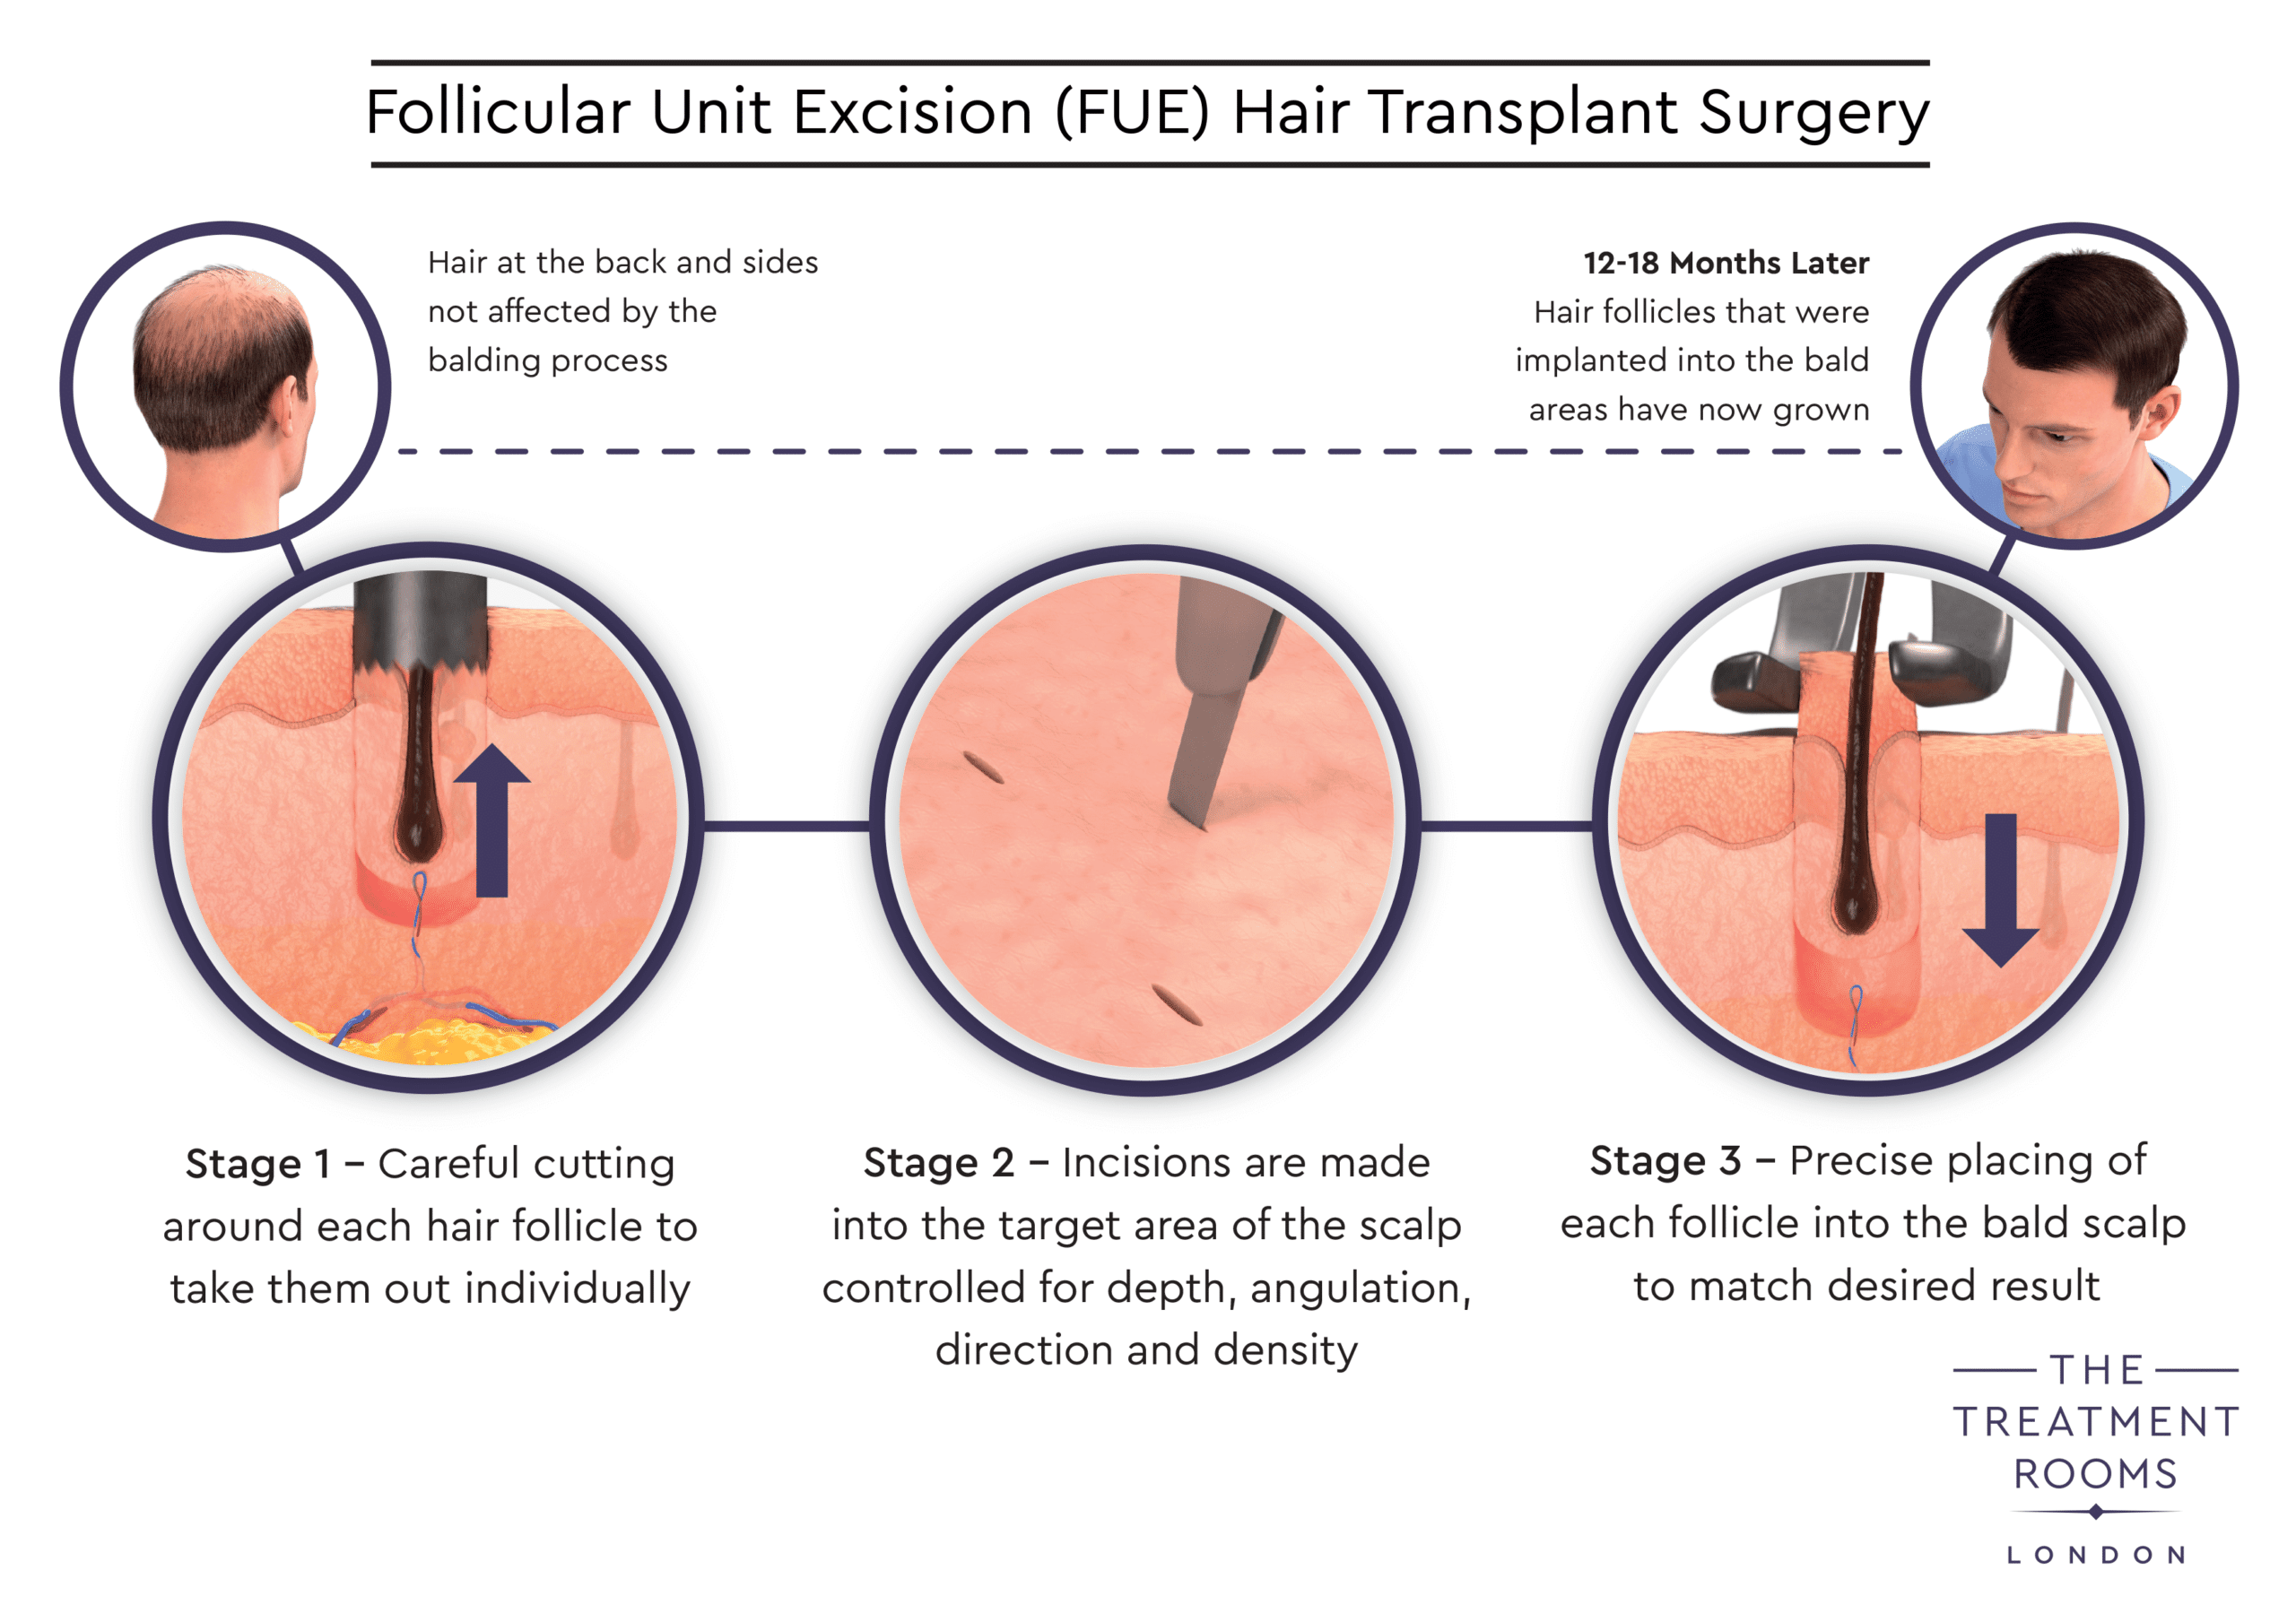 FUE hair transplant surgery diagram